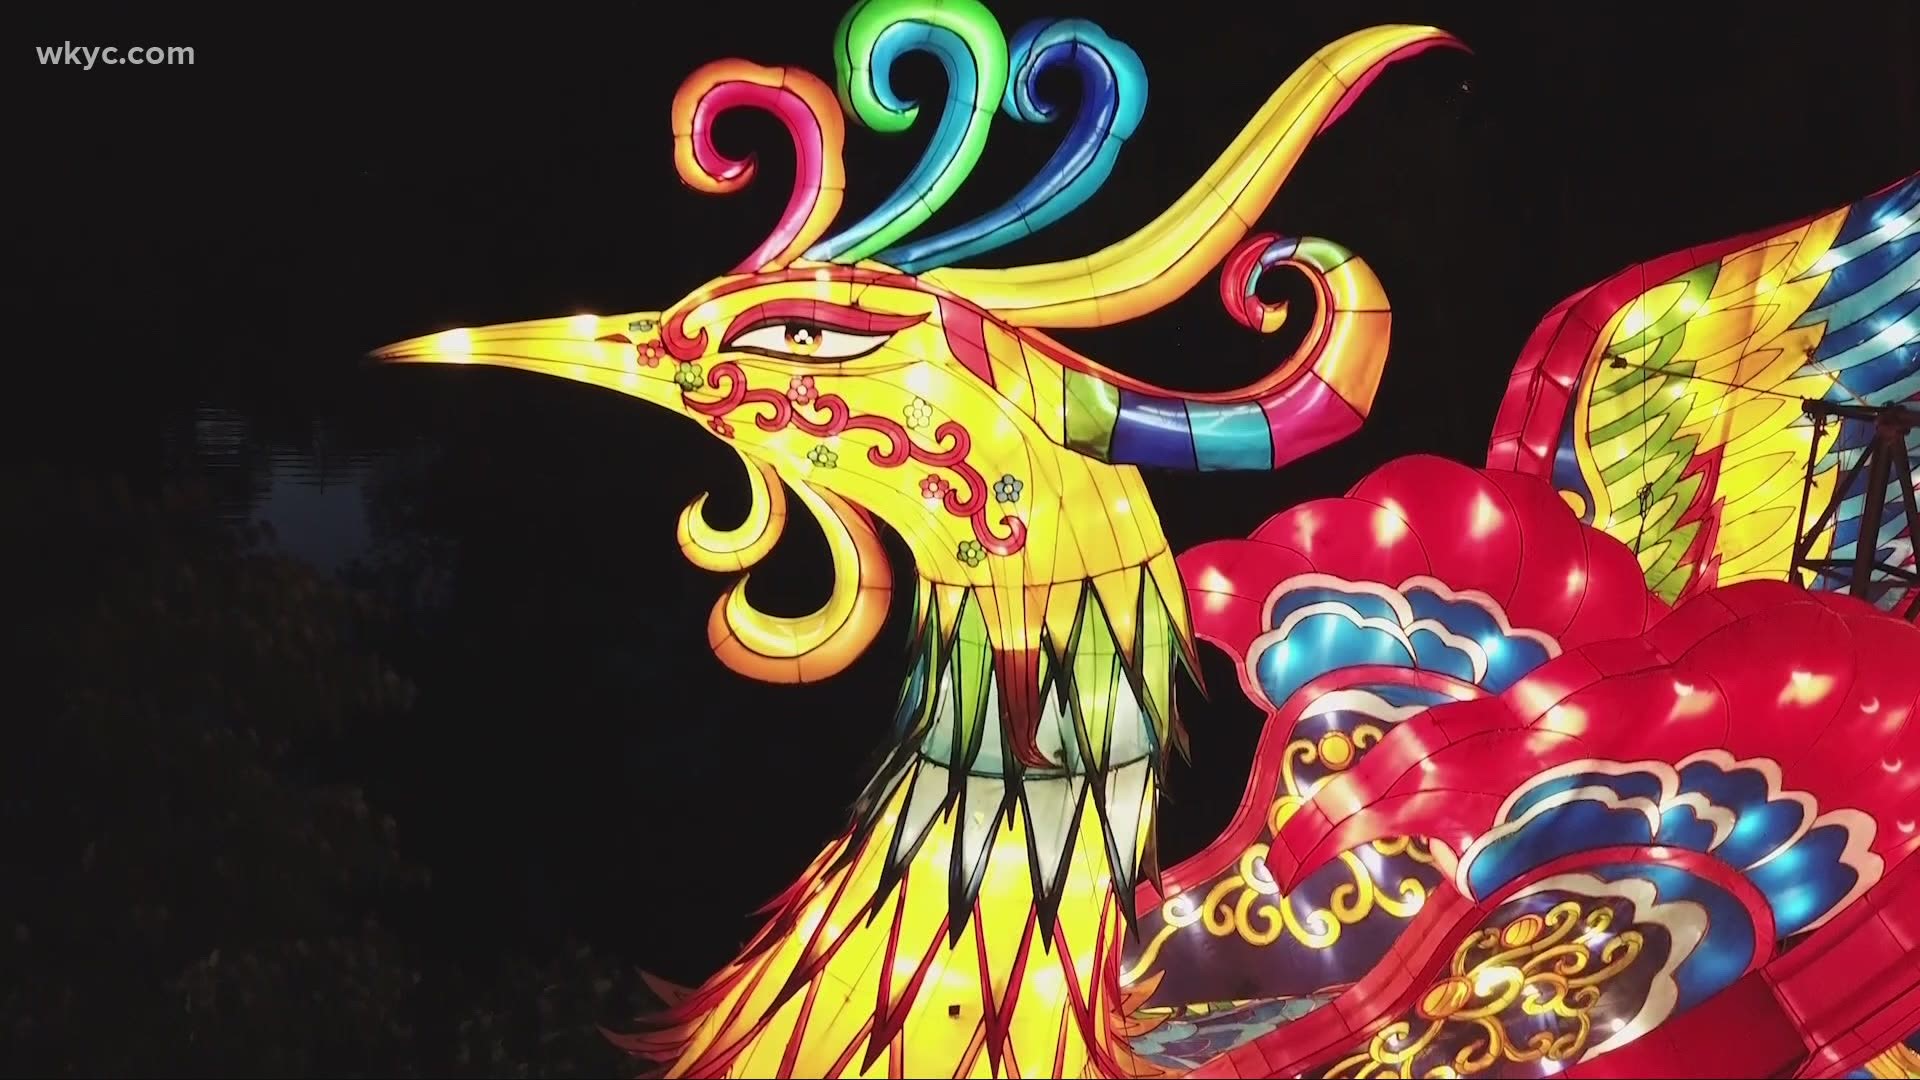 cleveland zoo asian lantern festival 2021